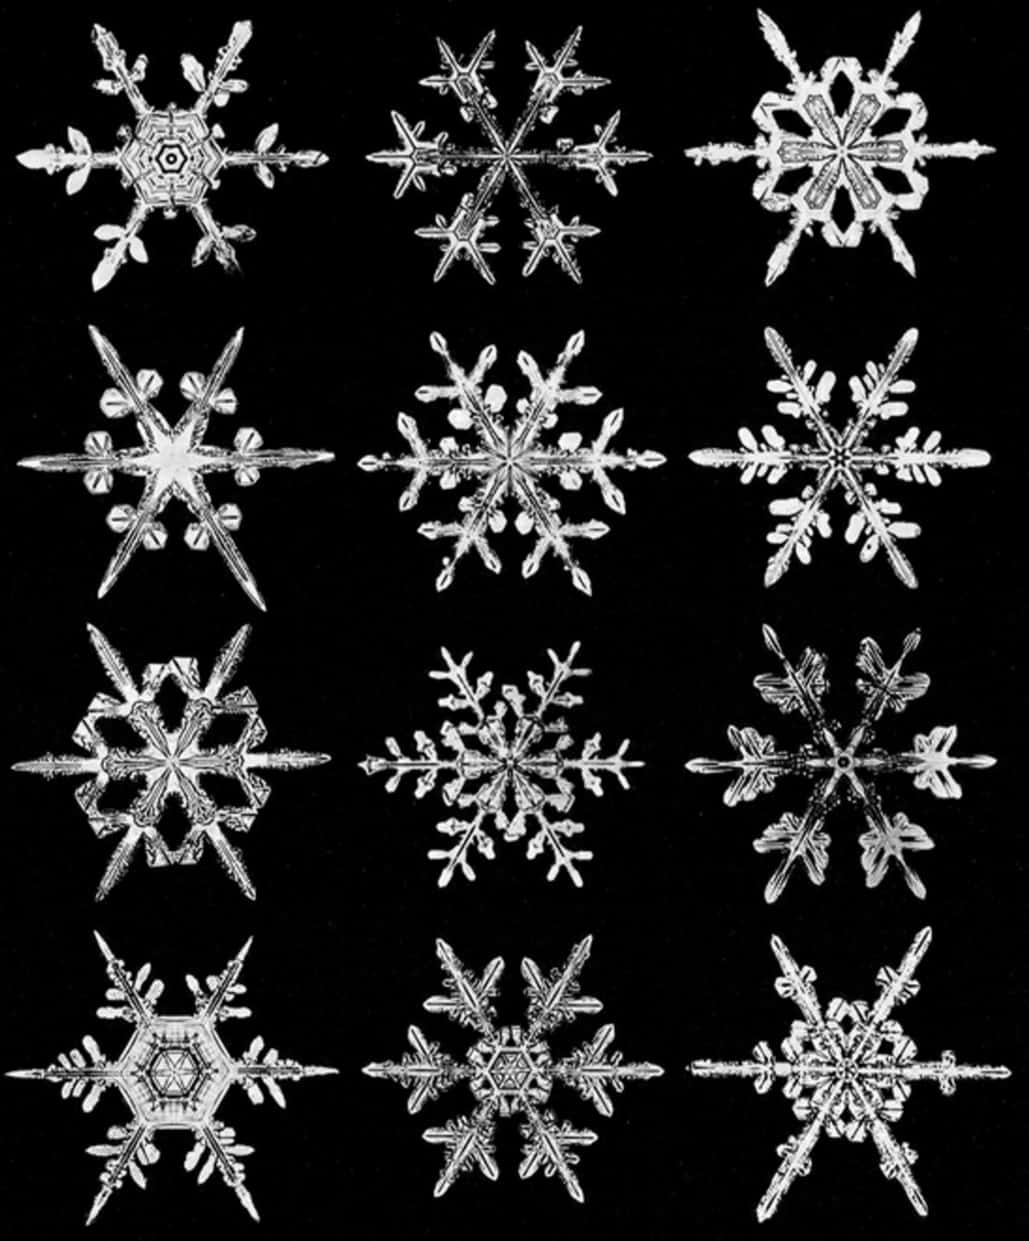 A close-up of a beautiful snowflake